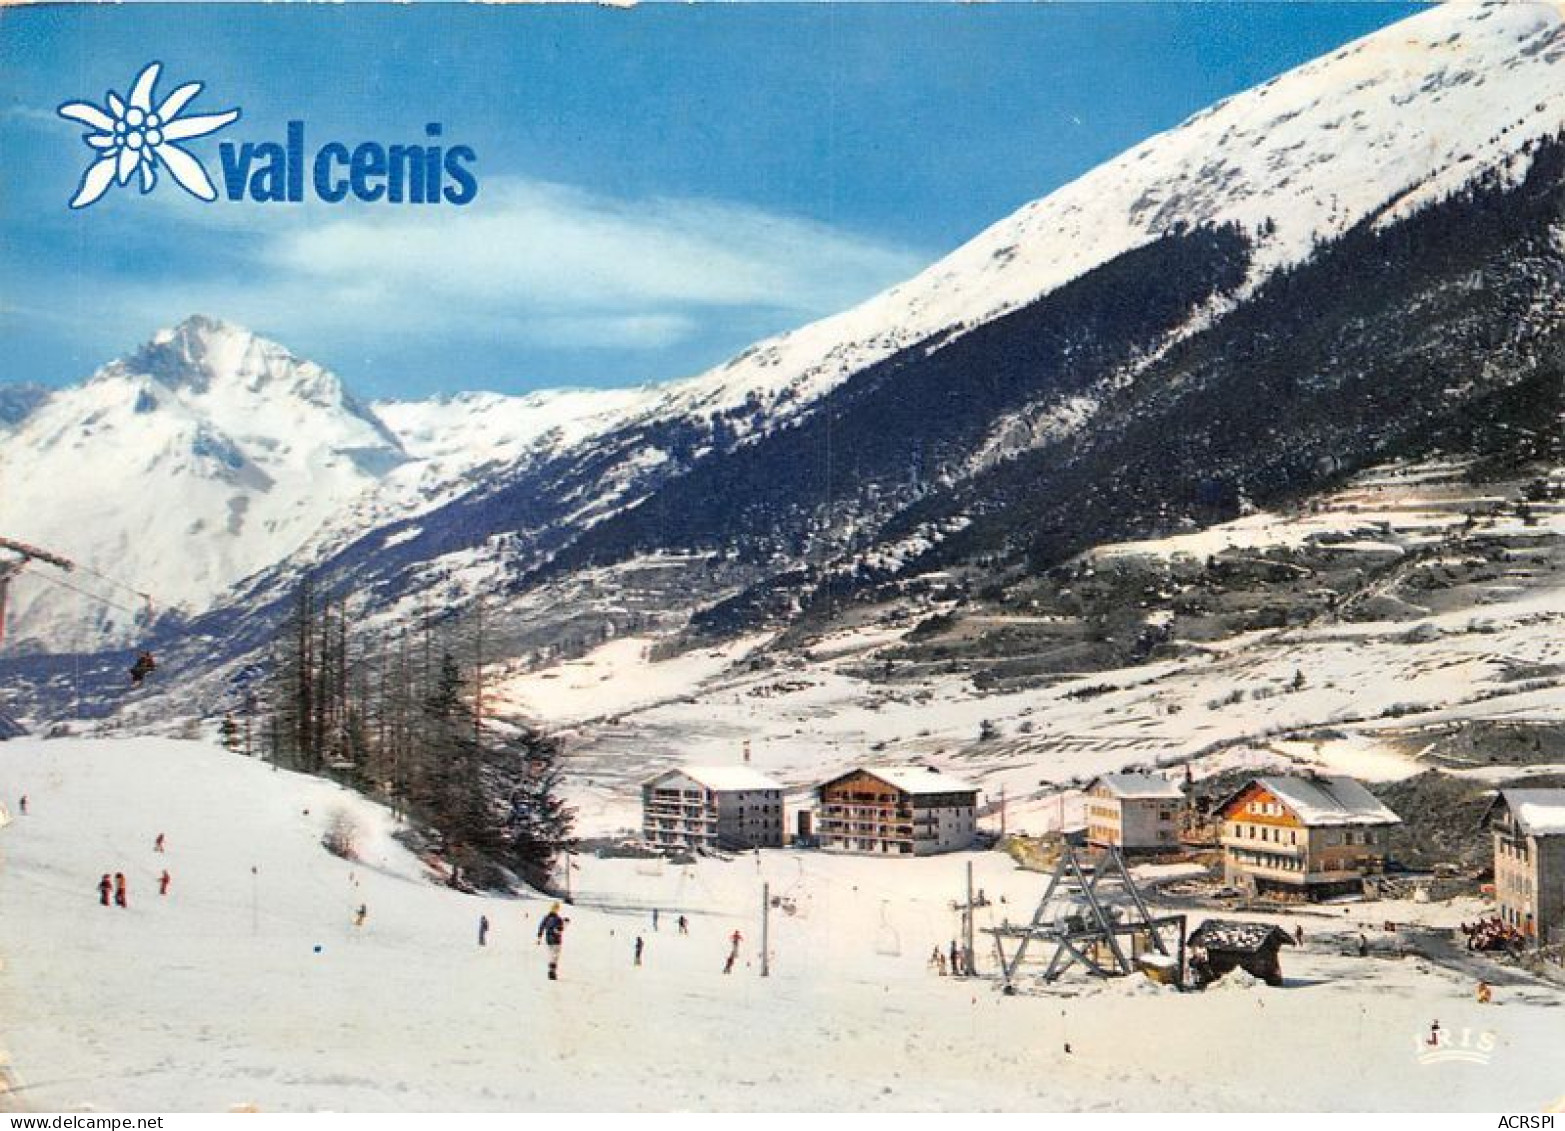 Savoie Maurienne VAL CENIS LANSLEVILLARD Alt 1500m Telesiege Le ST Genis (SCAN RECTO VERSO)MA0020 - Val Cenis